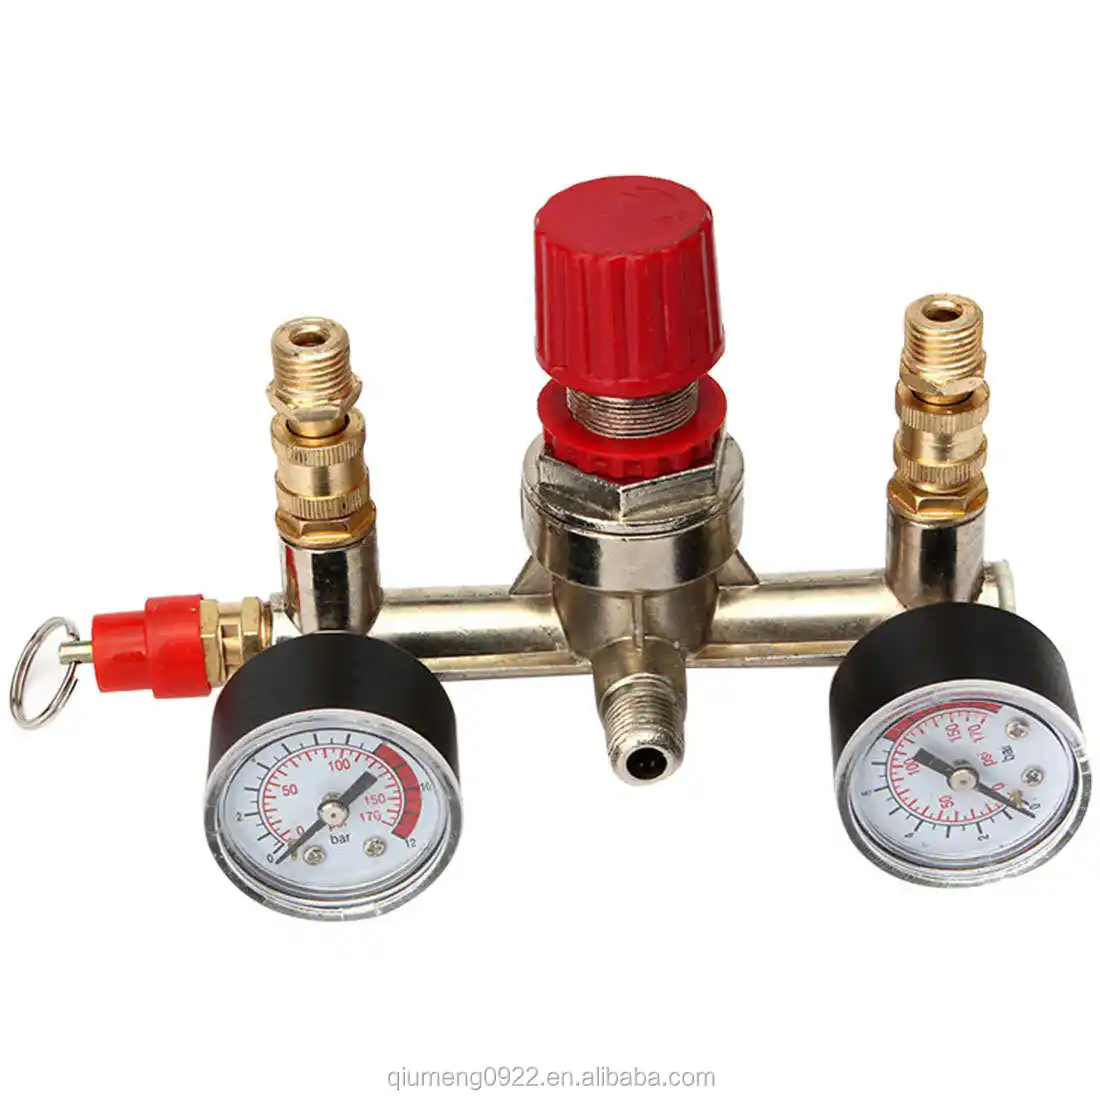 Regulator Heavy Duty Air Compressor Pump Pressure Control Switch Valve Gauge A 